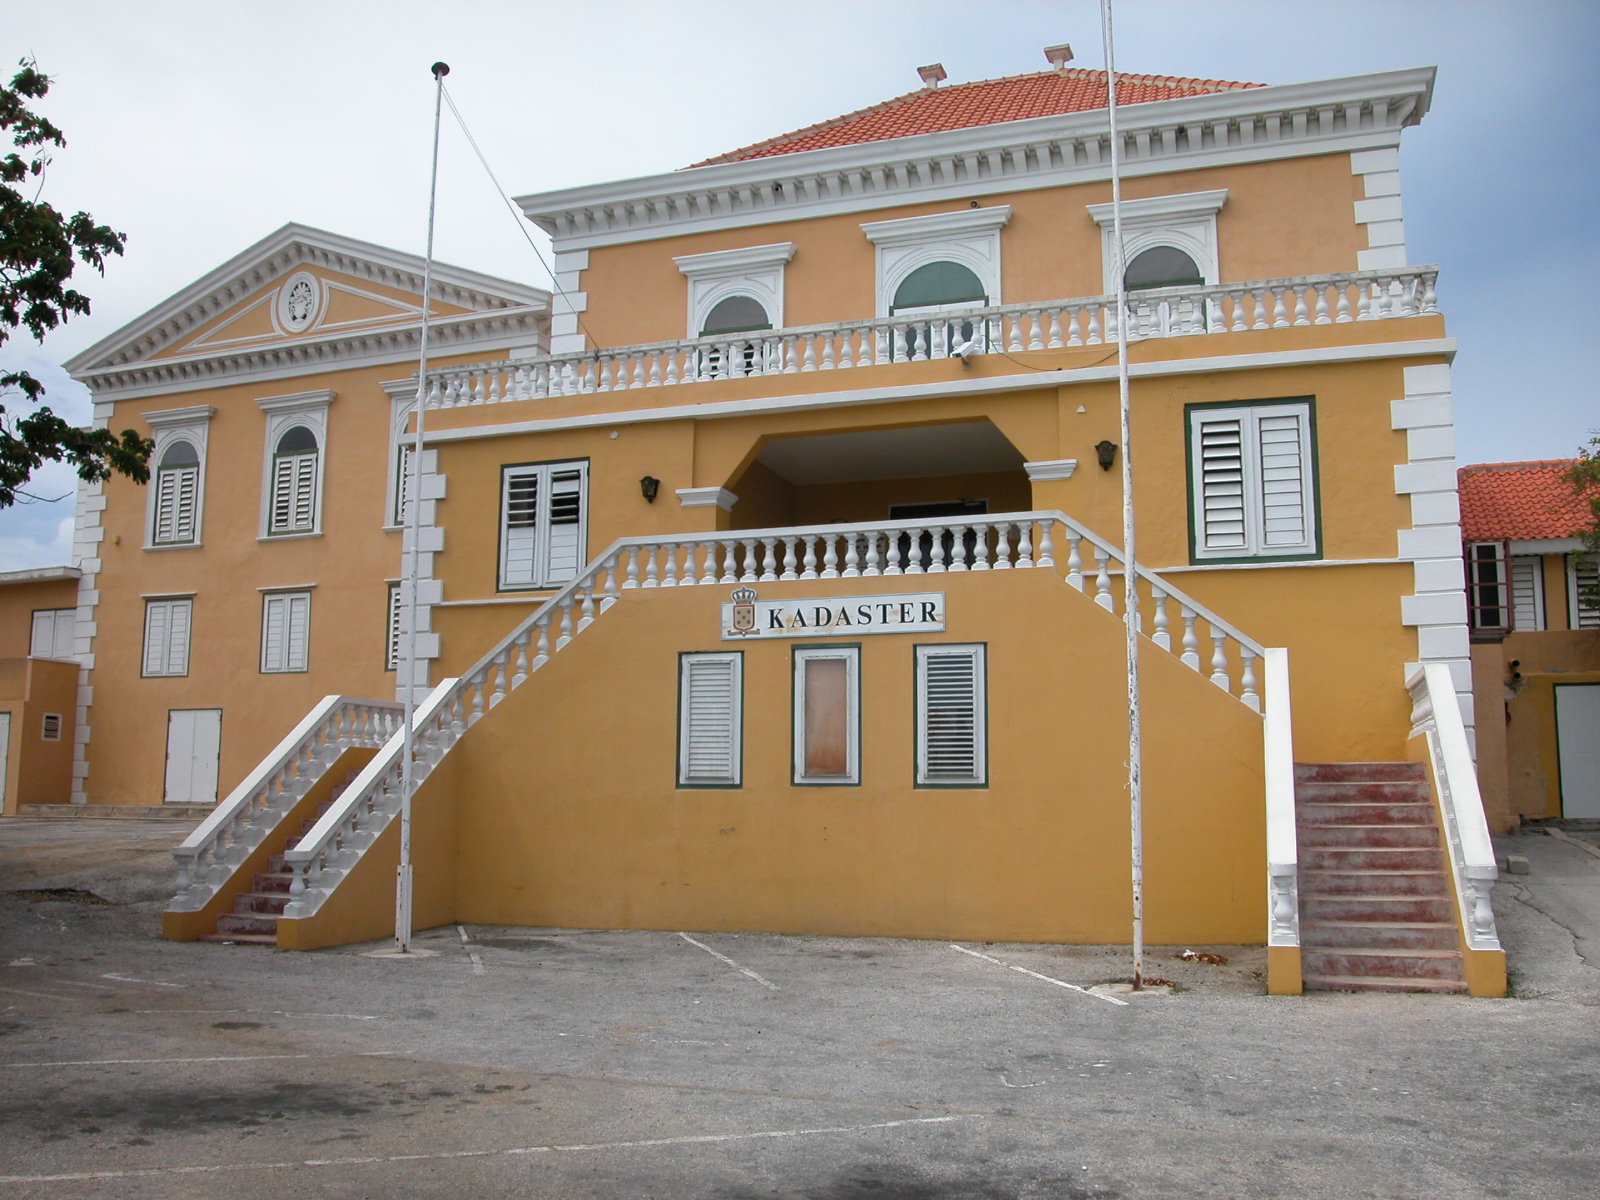 jacco kadaster townhall yellow painted house villa flagpoles balcony royalty-free